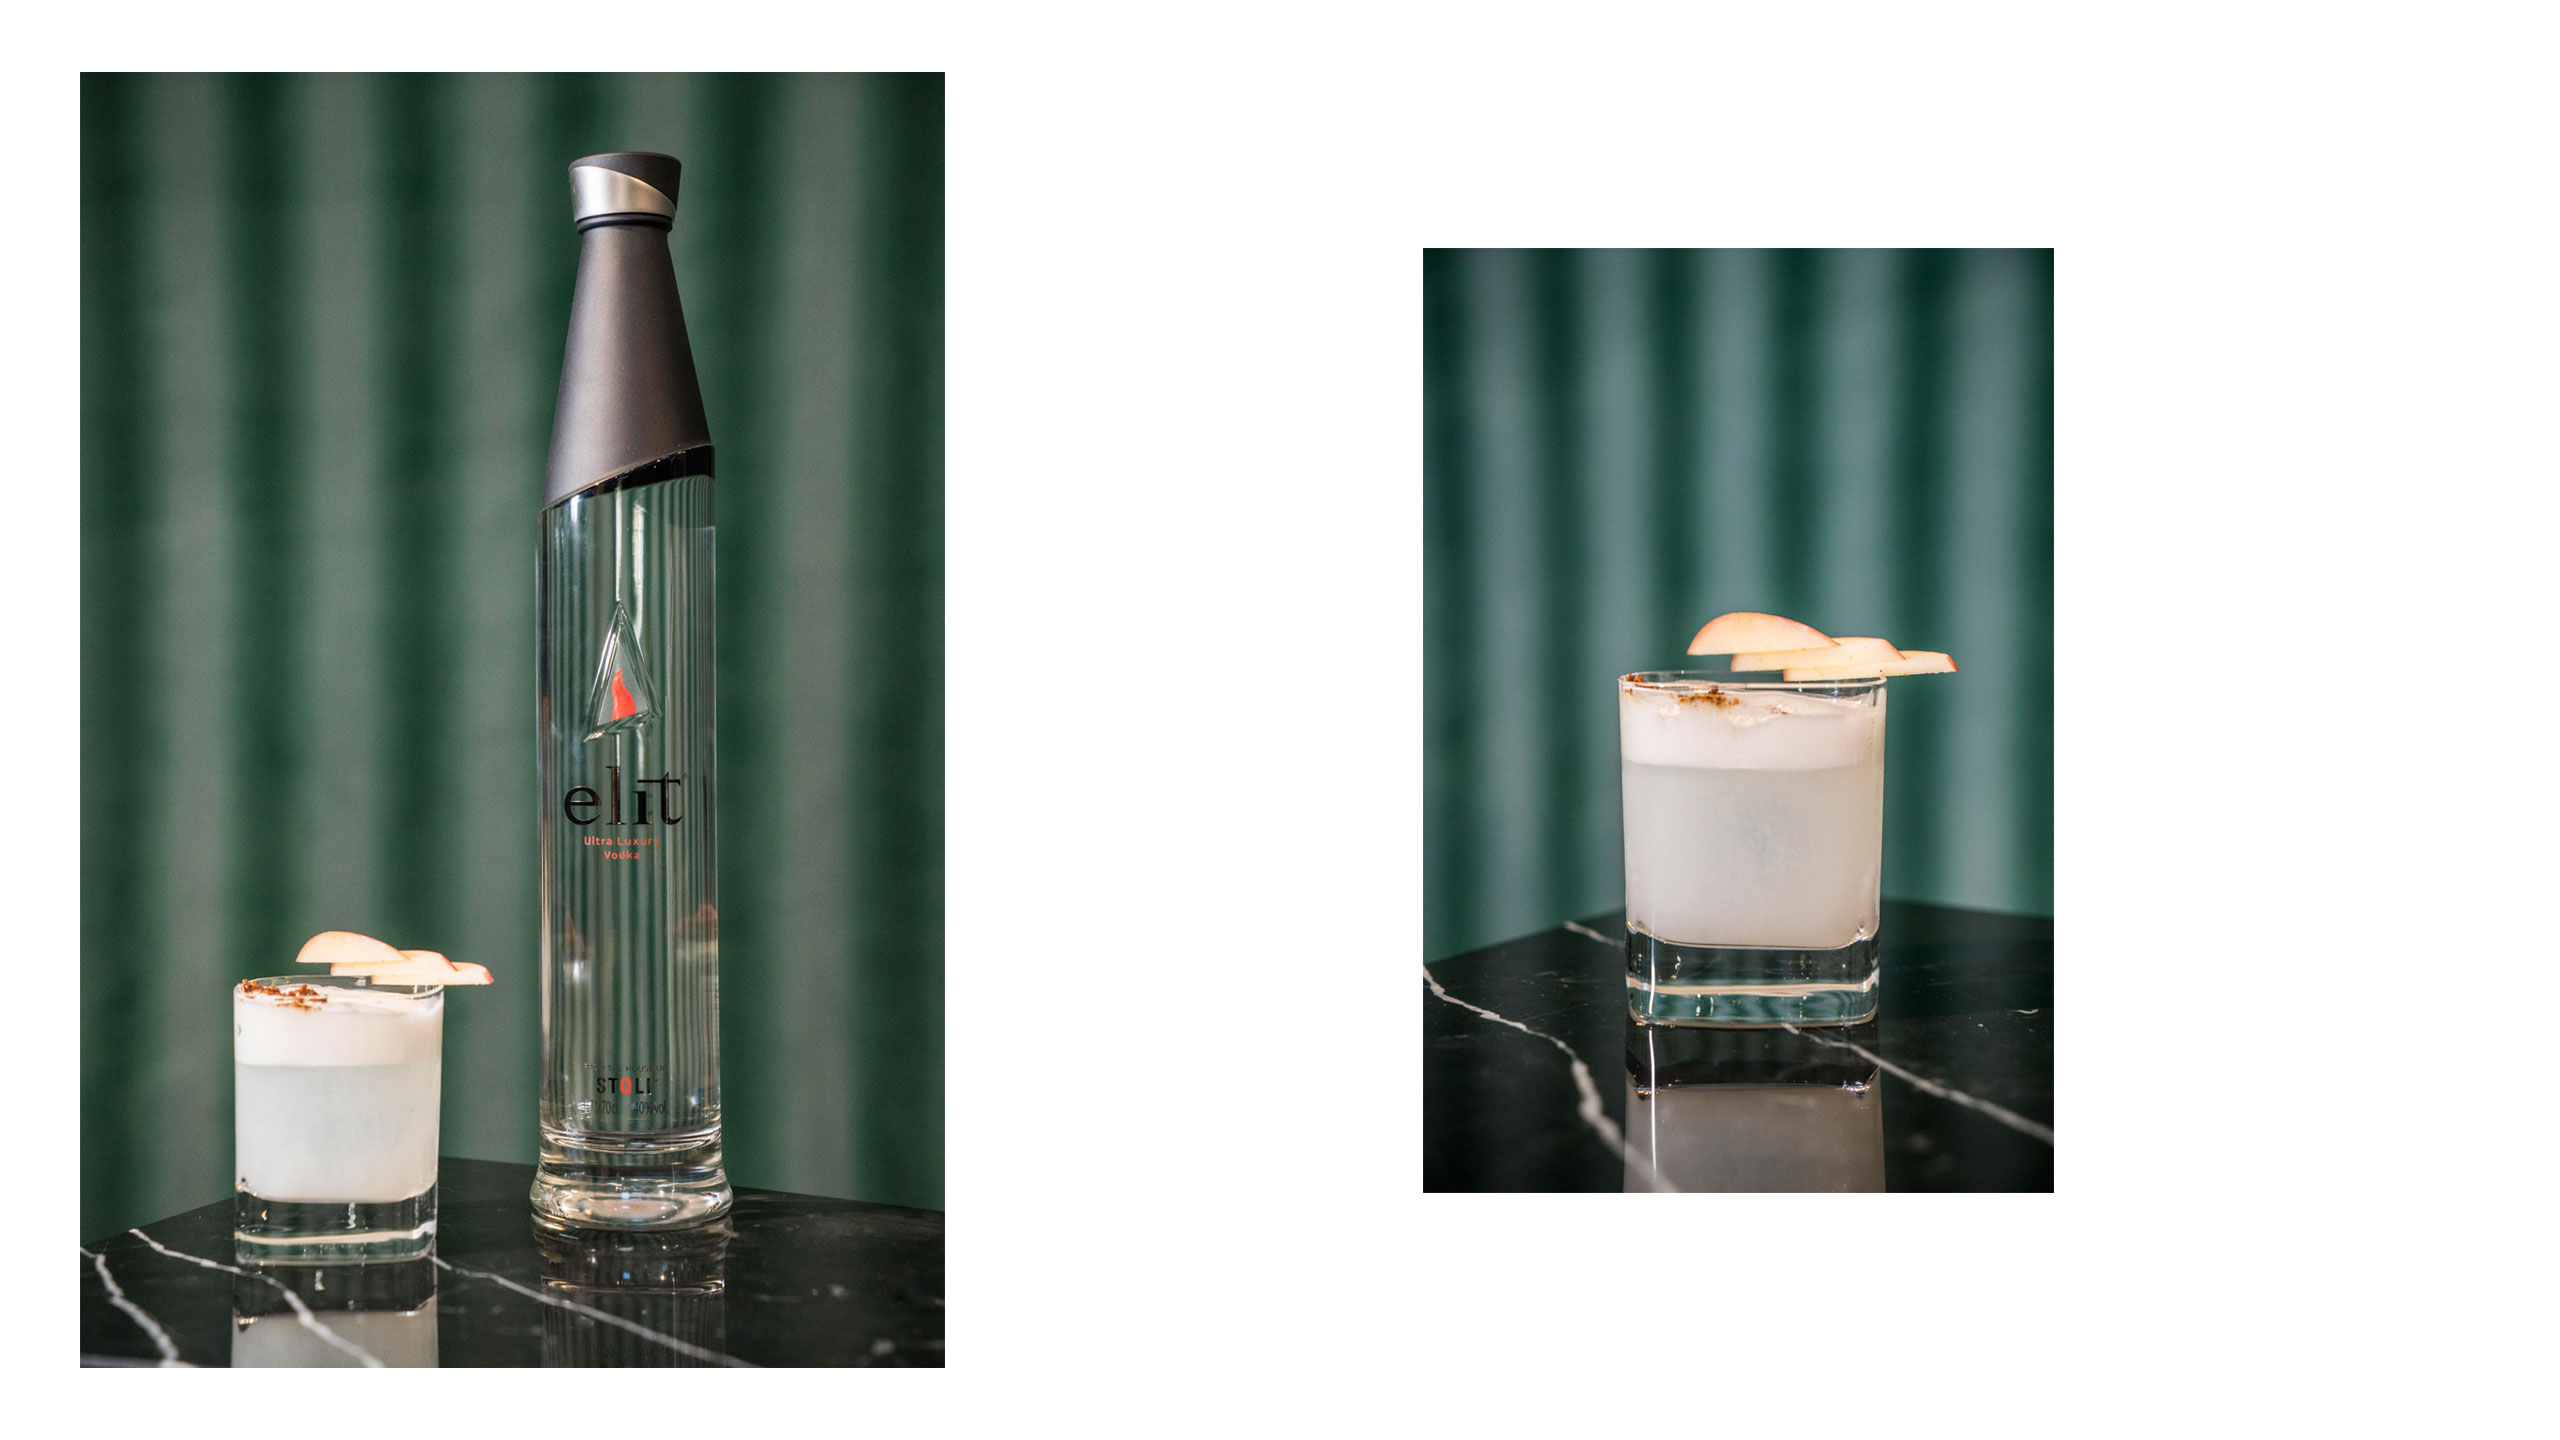 “Object” by elit® Vodka, inspired by El Lissitzky. Photo © elit® Vodka.